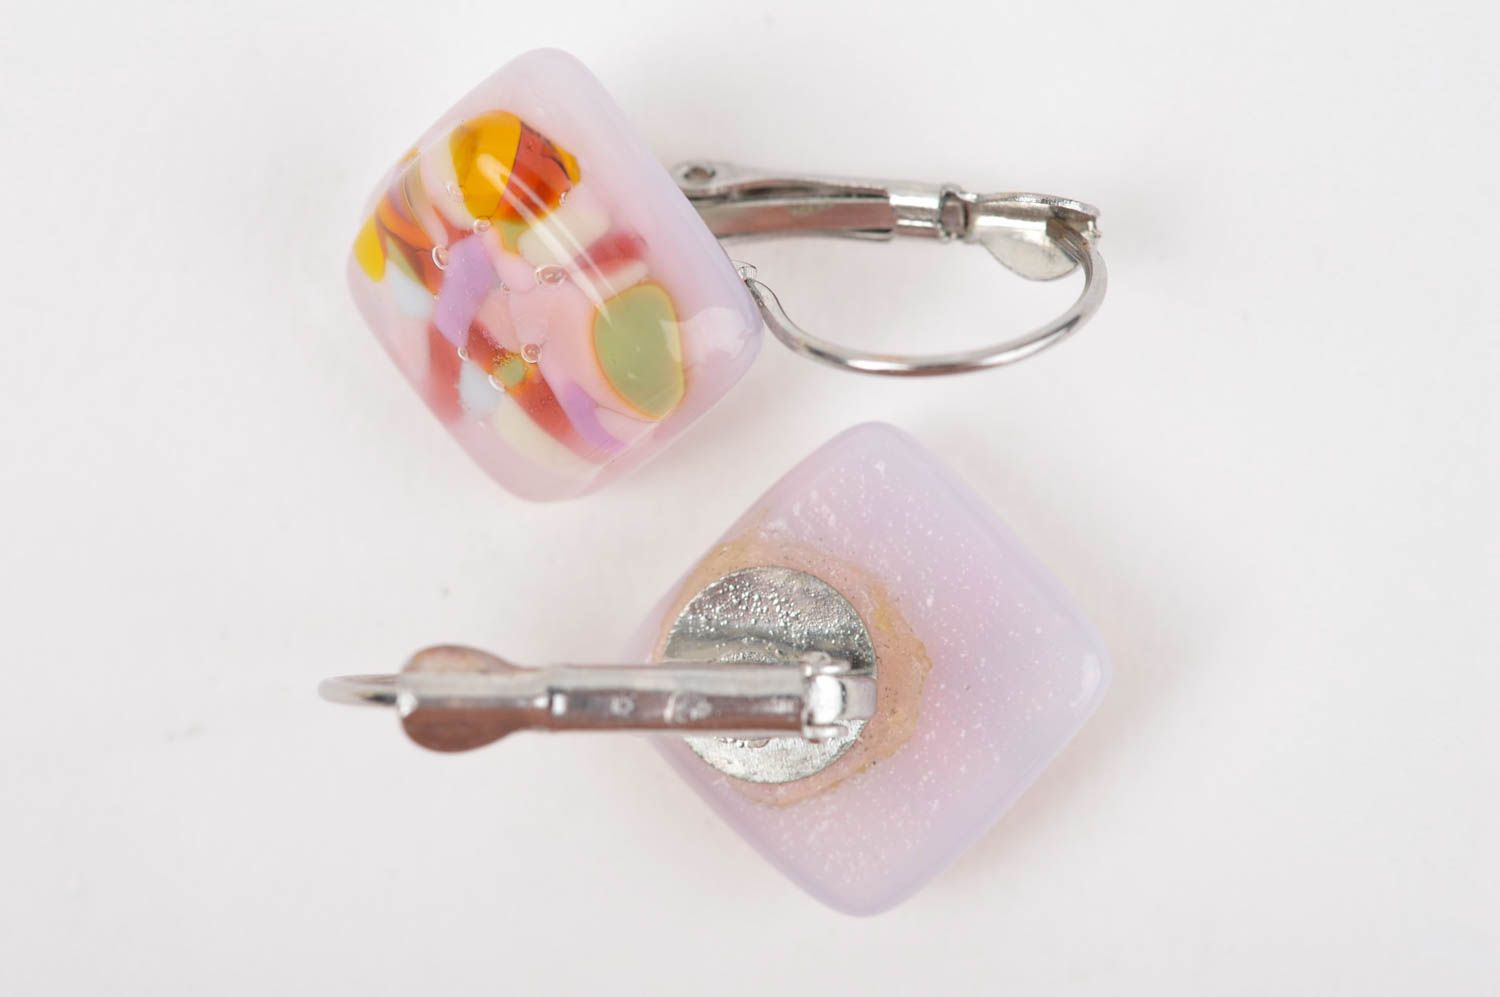 Unusual handmade glass earrings artisan jewelry designs accessories for girls photo 4